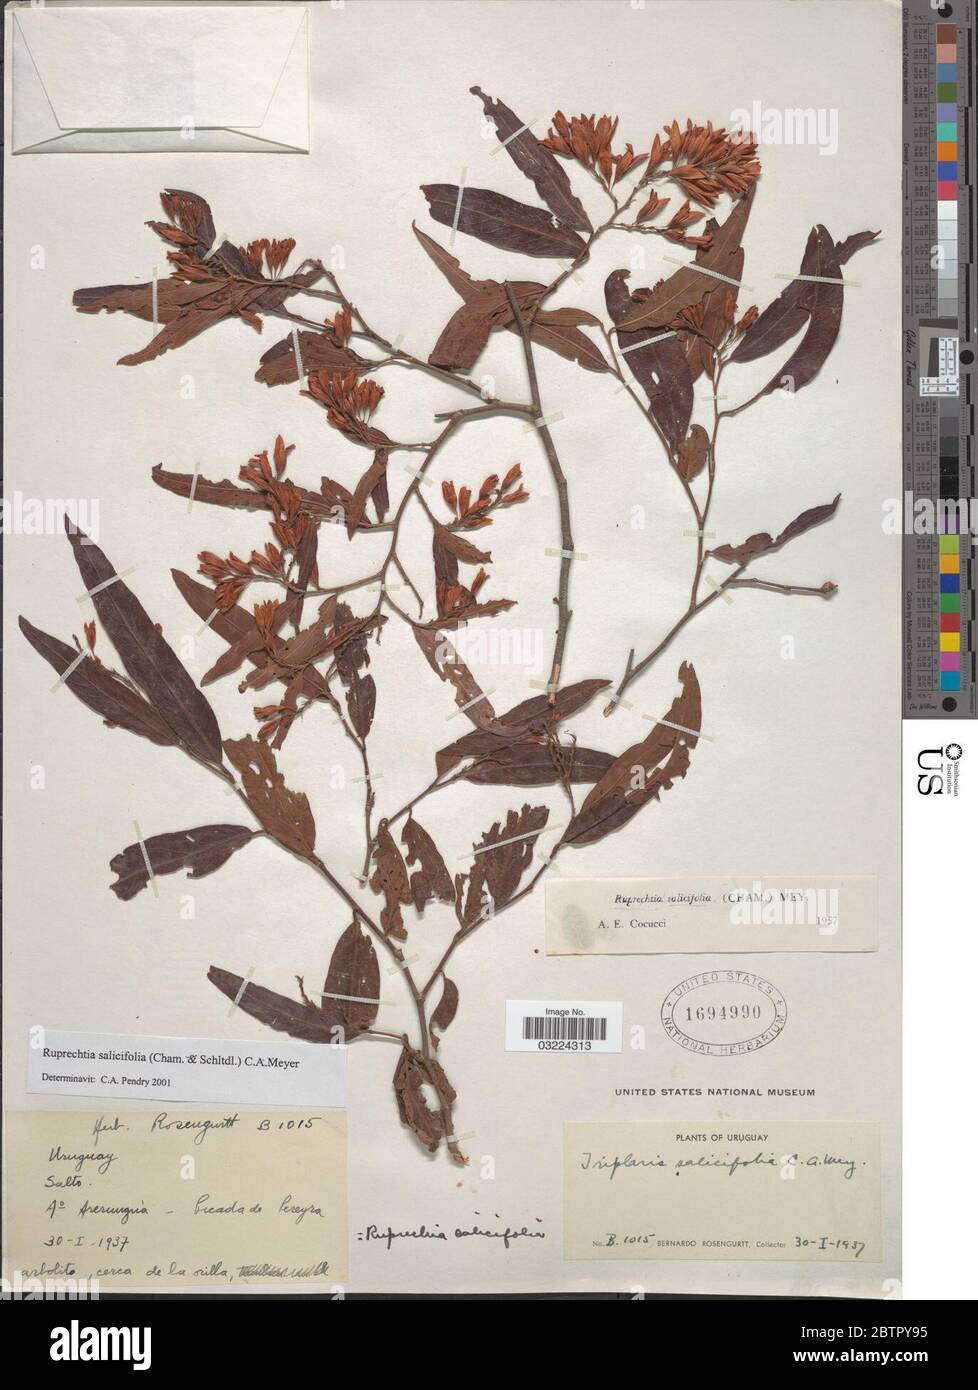 Ruprechtia salicifolia Cham Schltdl CA Mey. Stock Photo